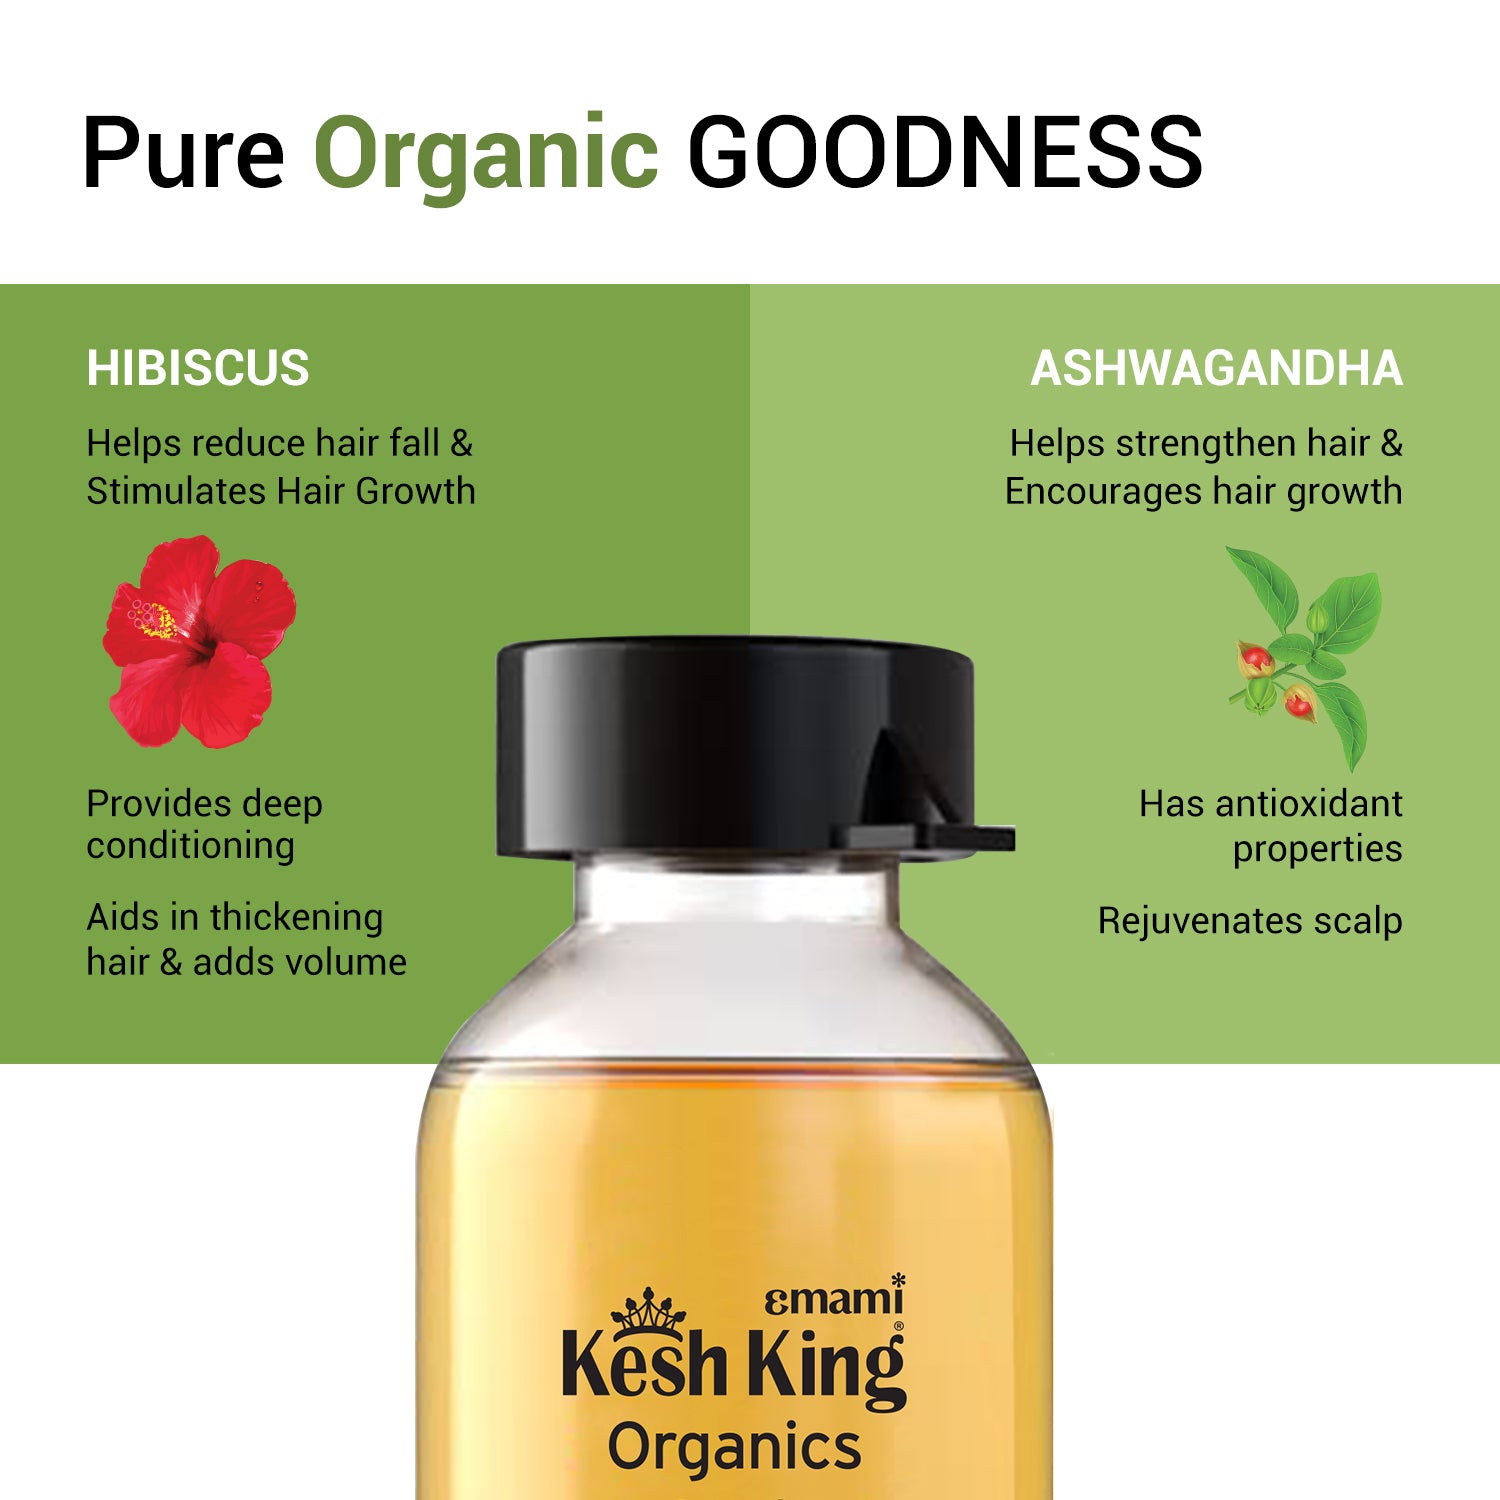 Kesh King Organics Neem, Bhringraj &amp; Tea Tree Booster Hair Oil Shots